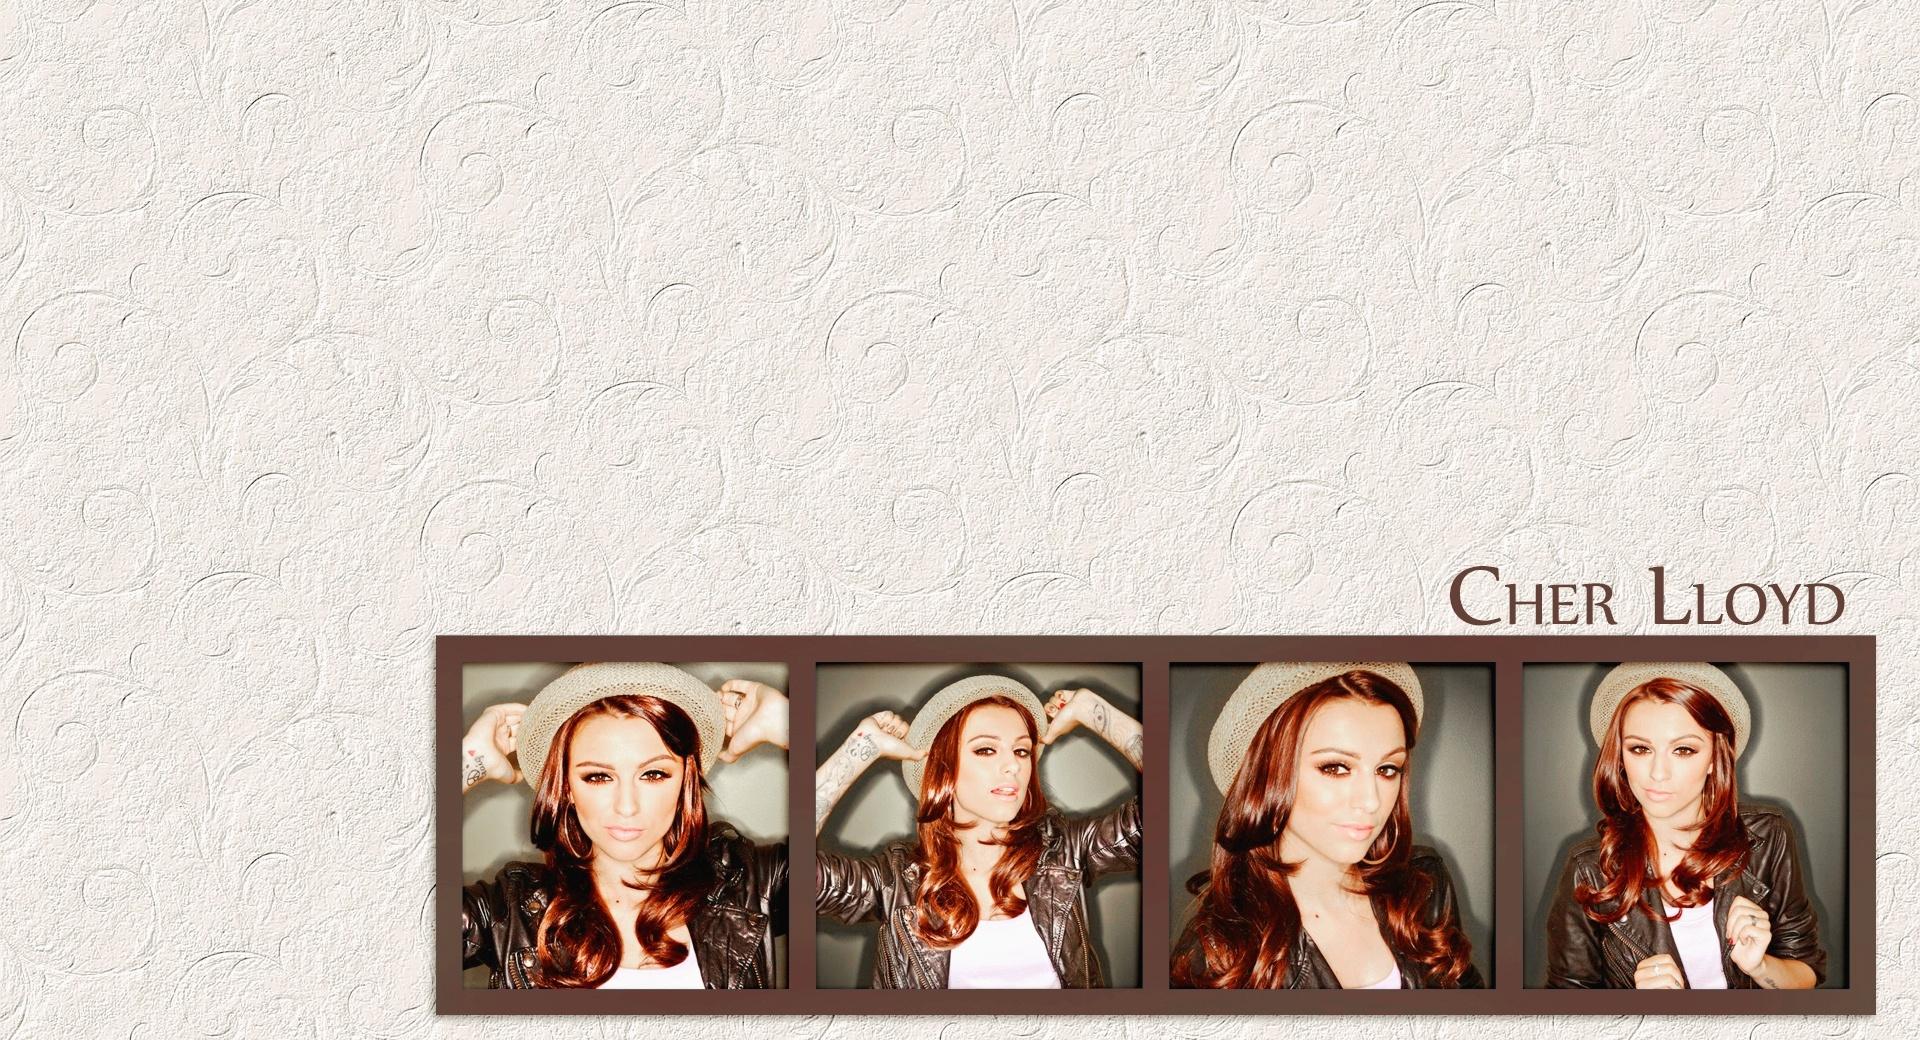 Cher Lloyd at 2048 x 2048 iPad size wallpapers HD quality